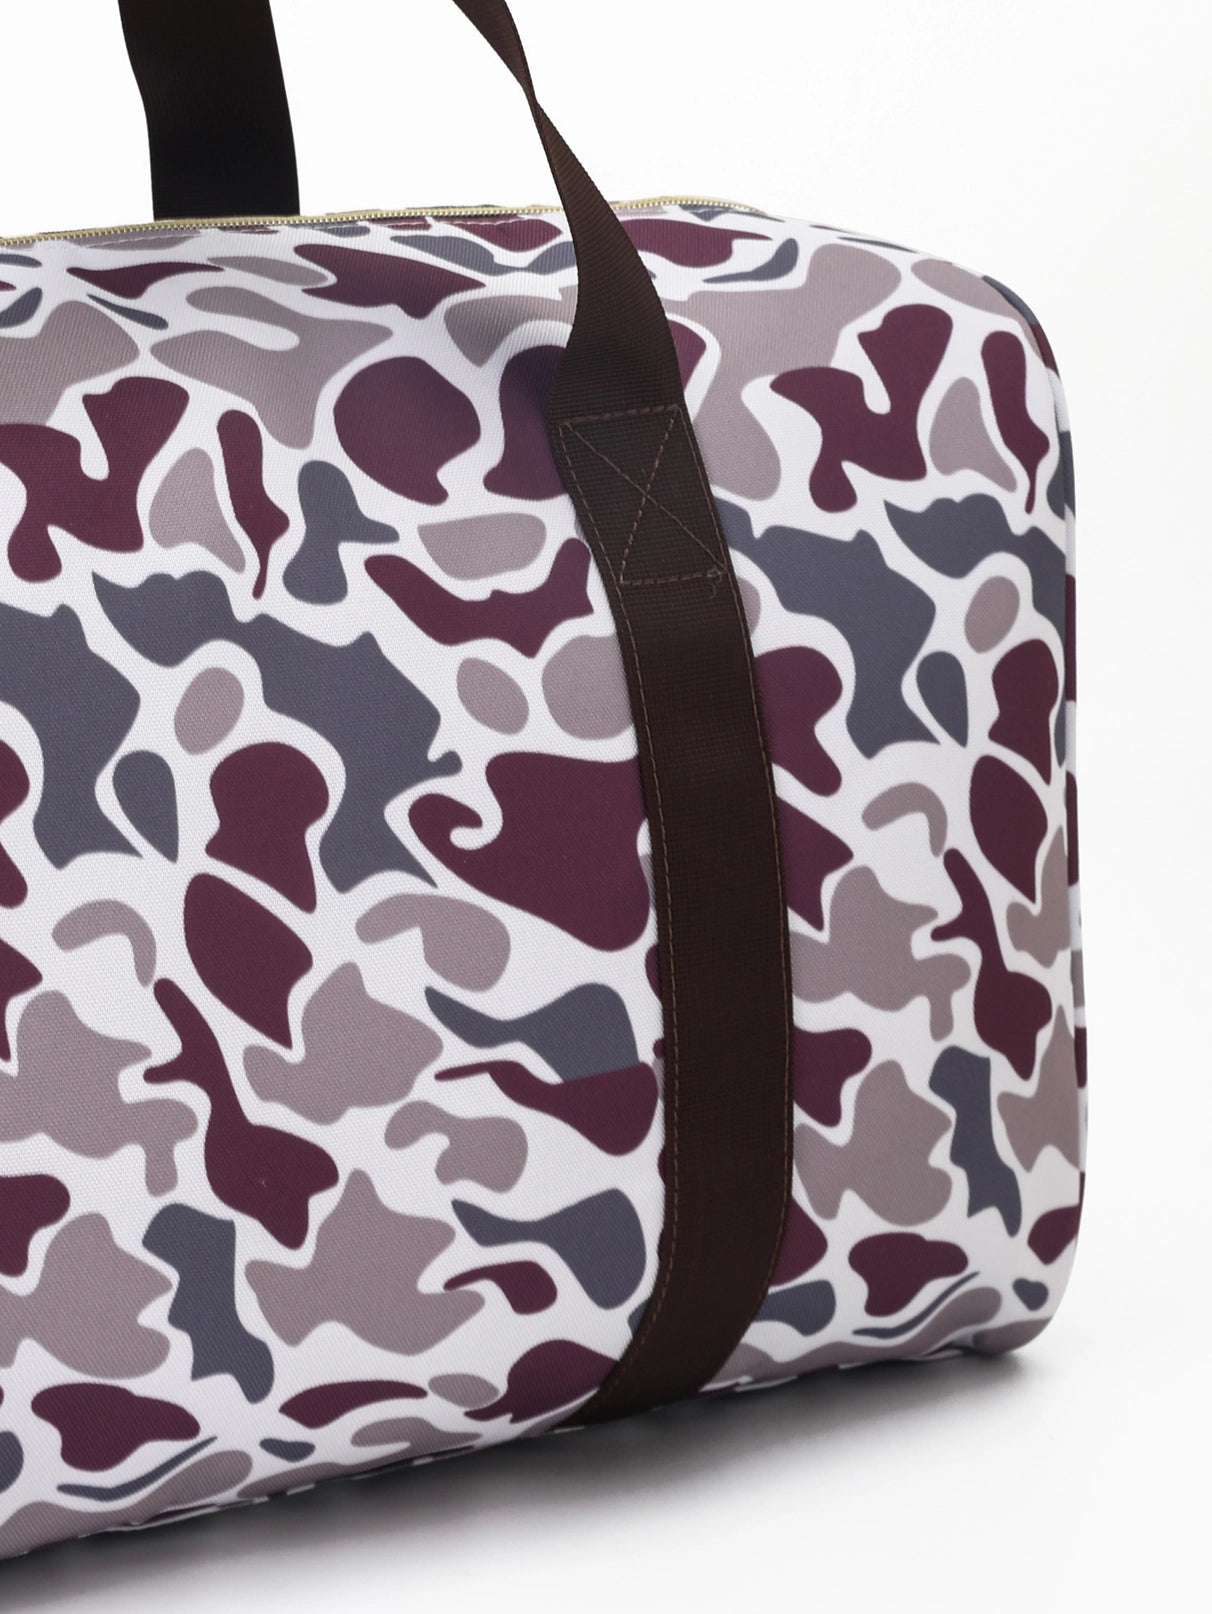 Camouflage Duffel Bag